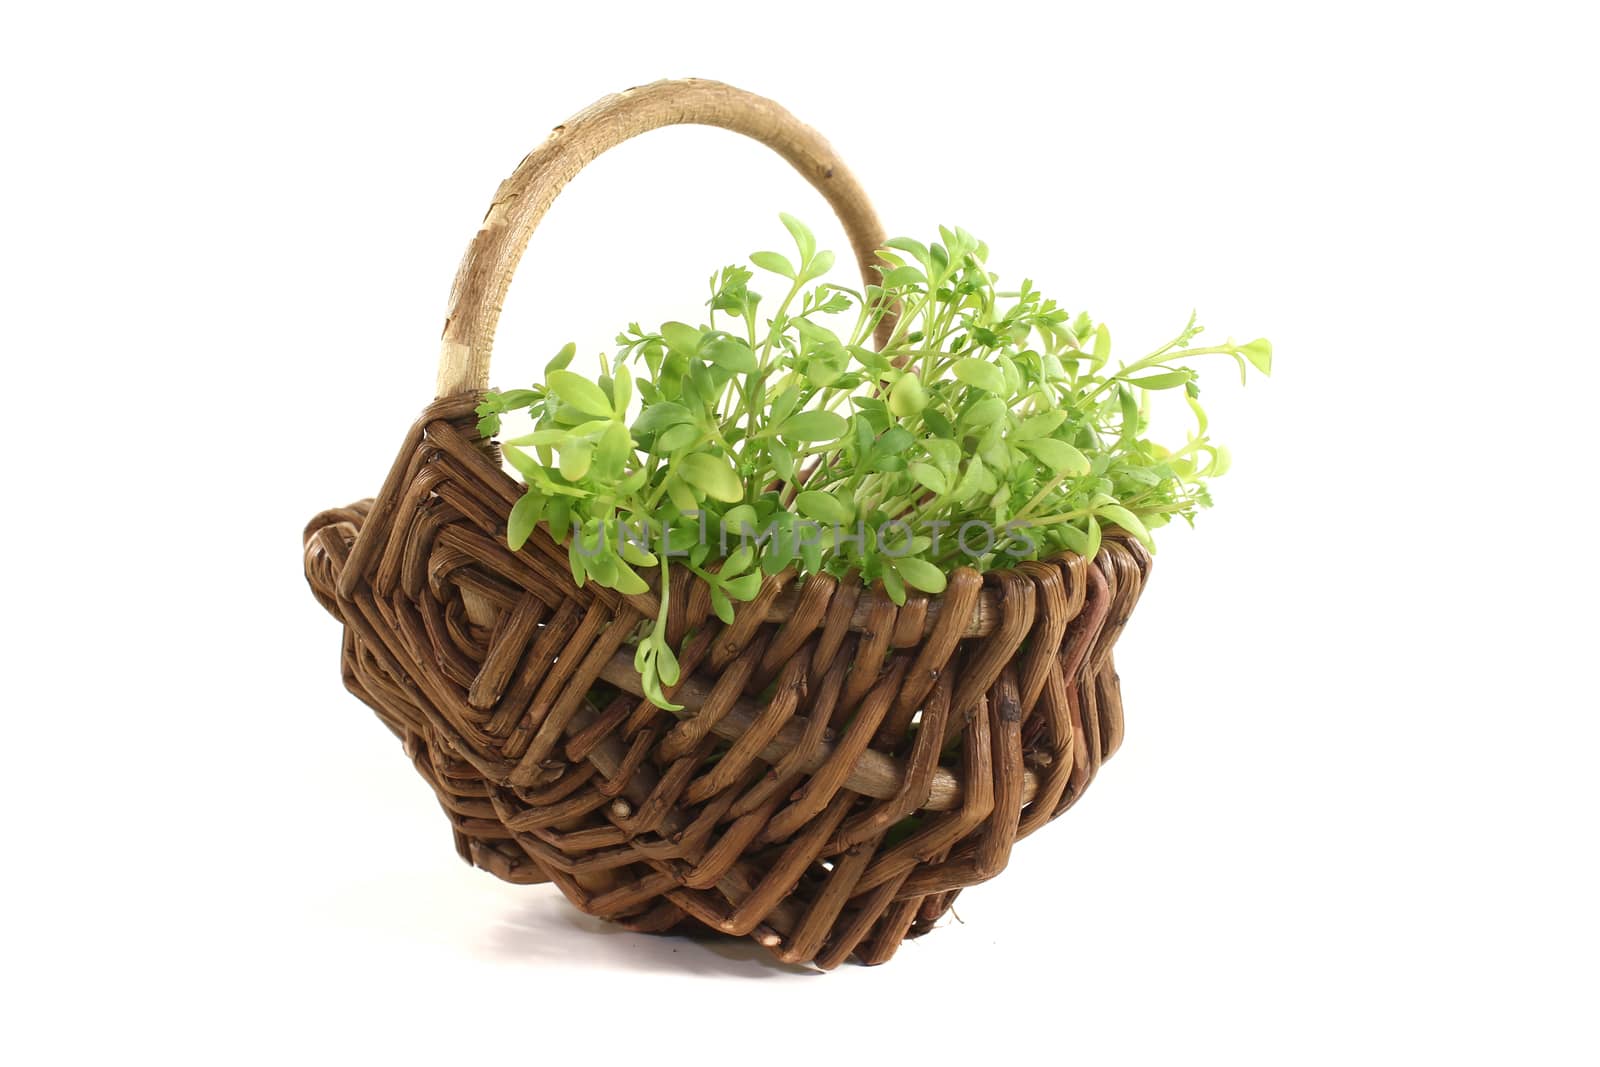 green garden cress in a basket on light background